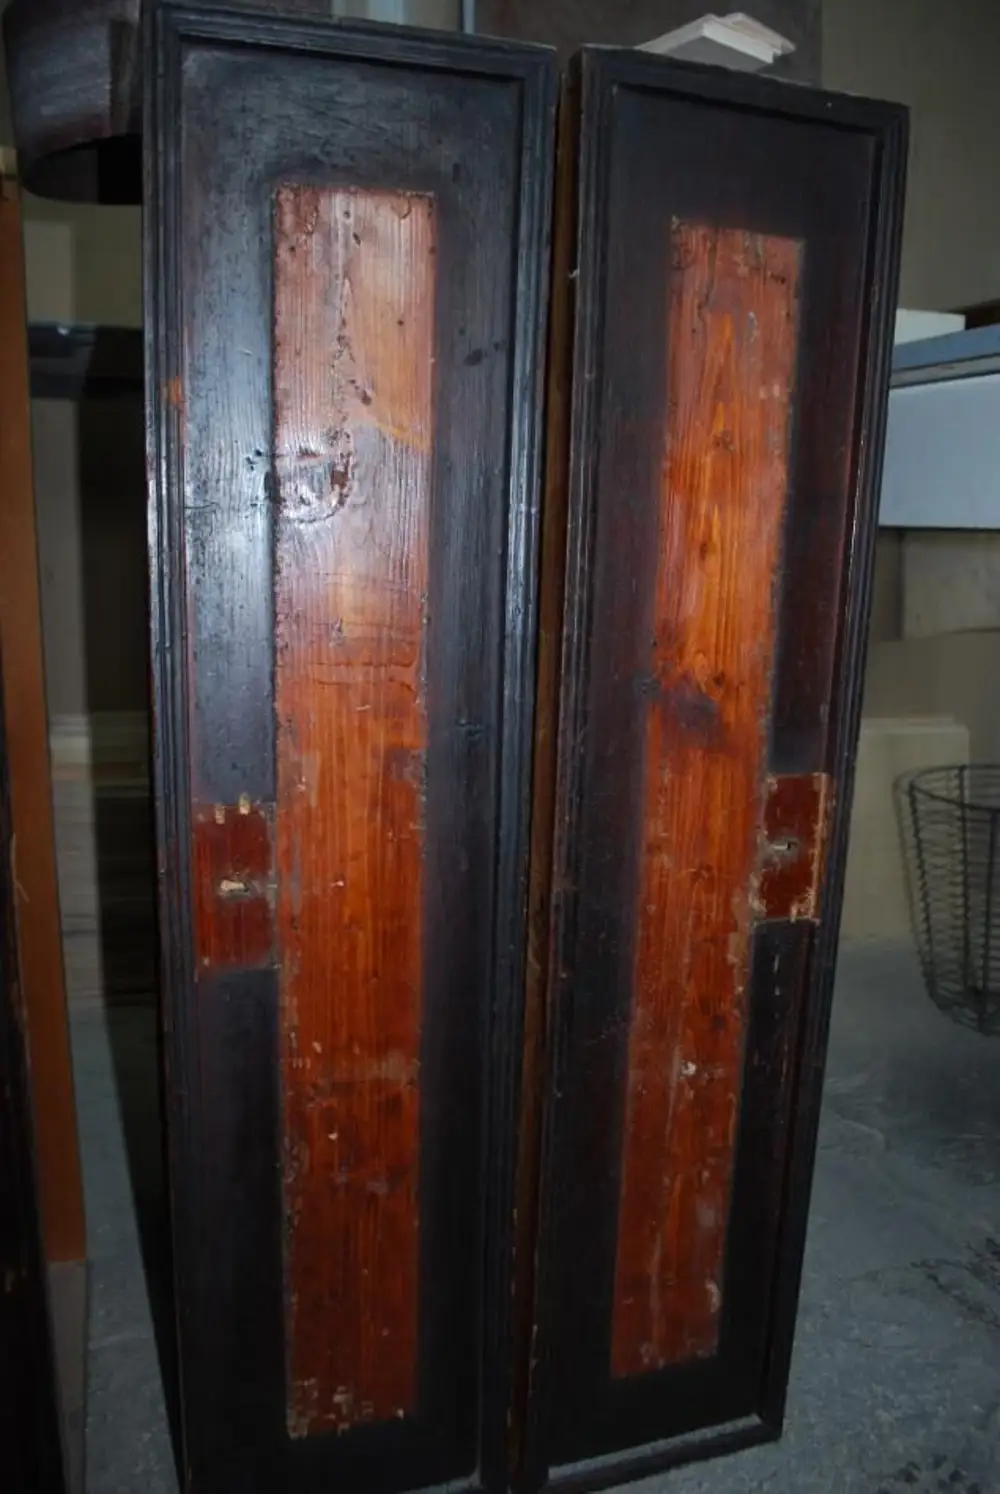 реставрация старого шкафа своими руками в домашних условиях деревянного